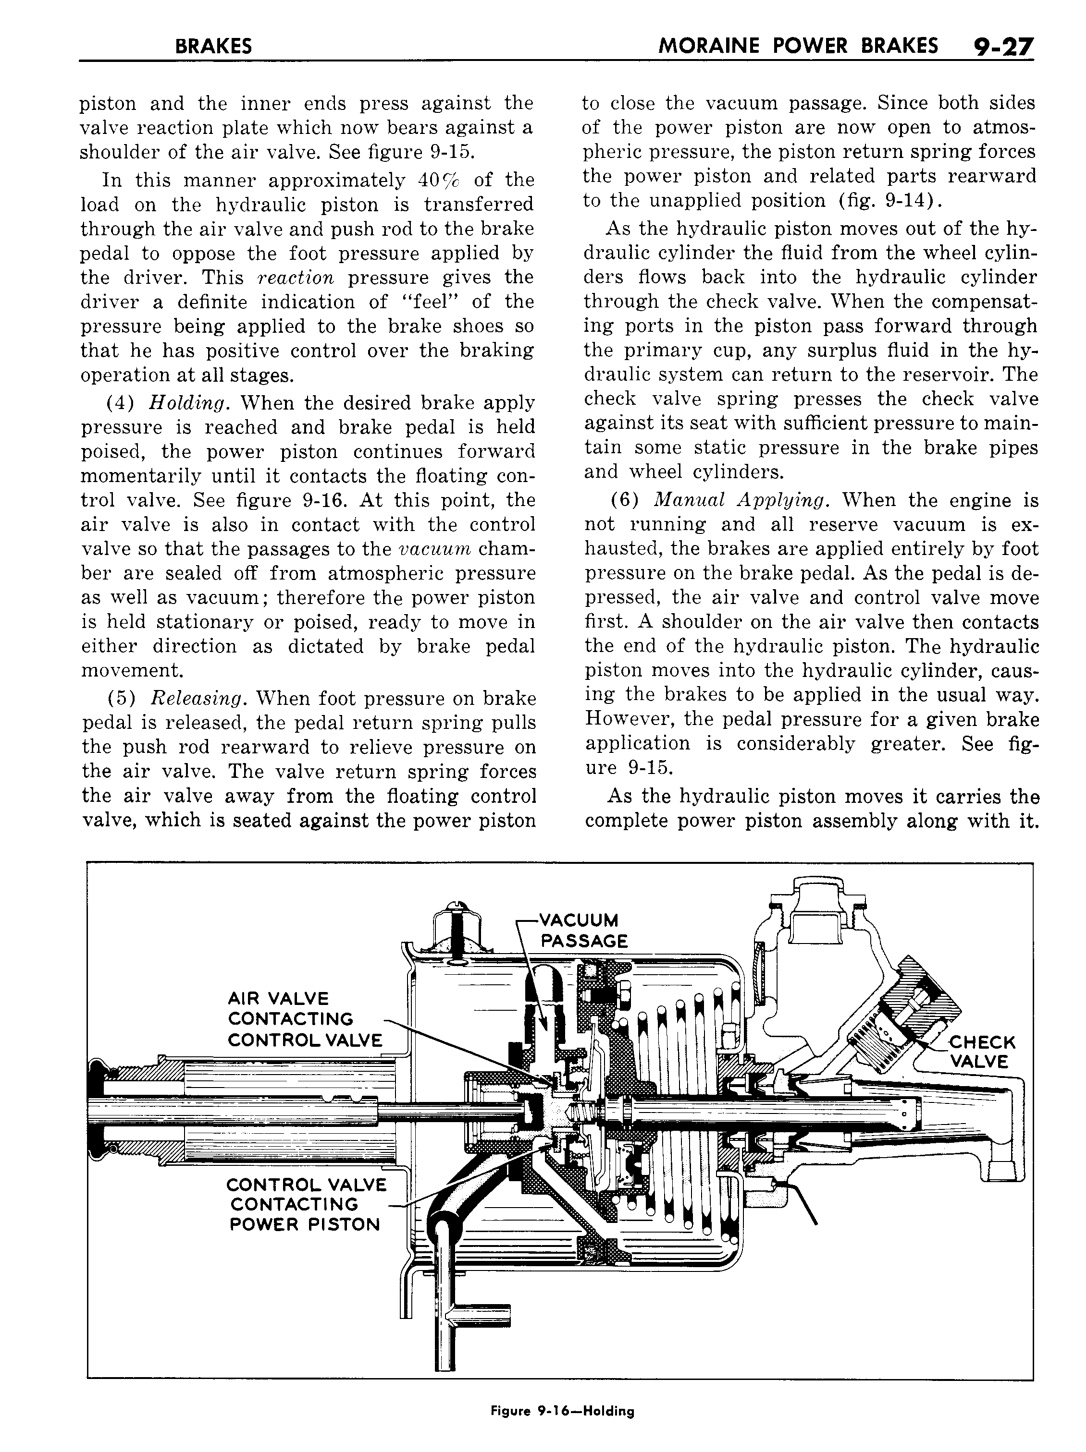 n_10 1957 Buick Shop Manual - Brakes-027-027.jpg